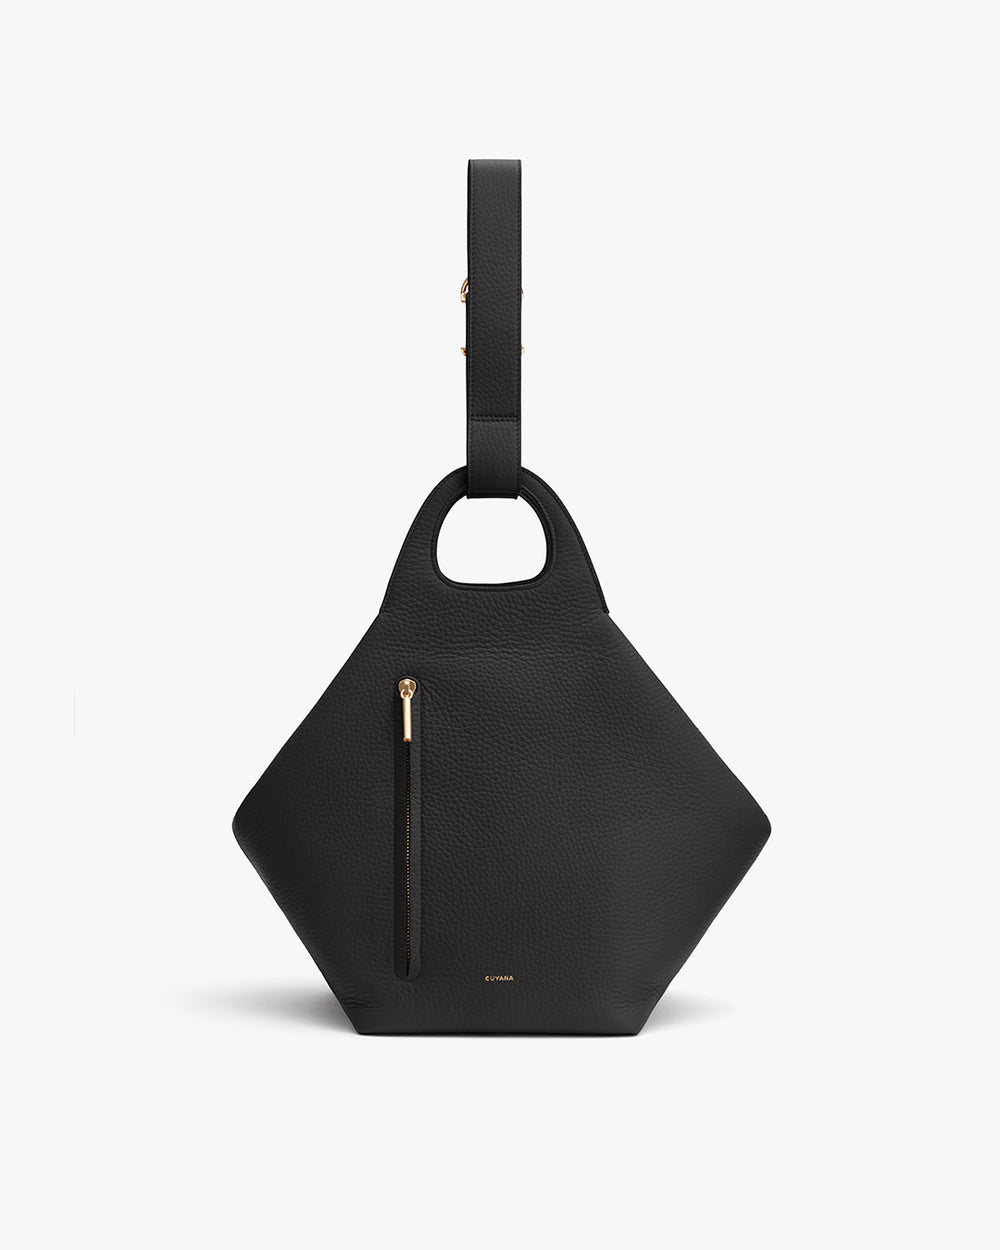 Hexagonal handbag with a top handle and front zipper pocket.